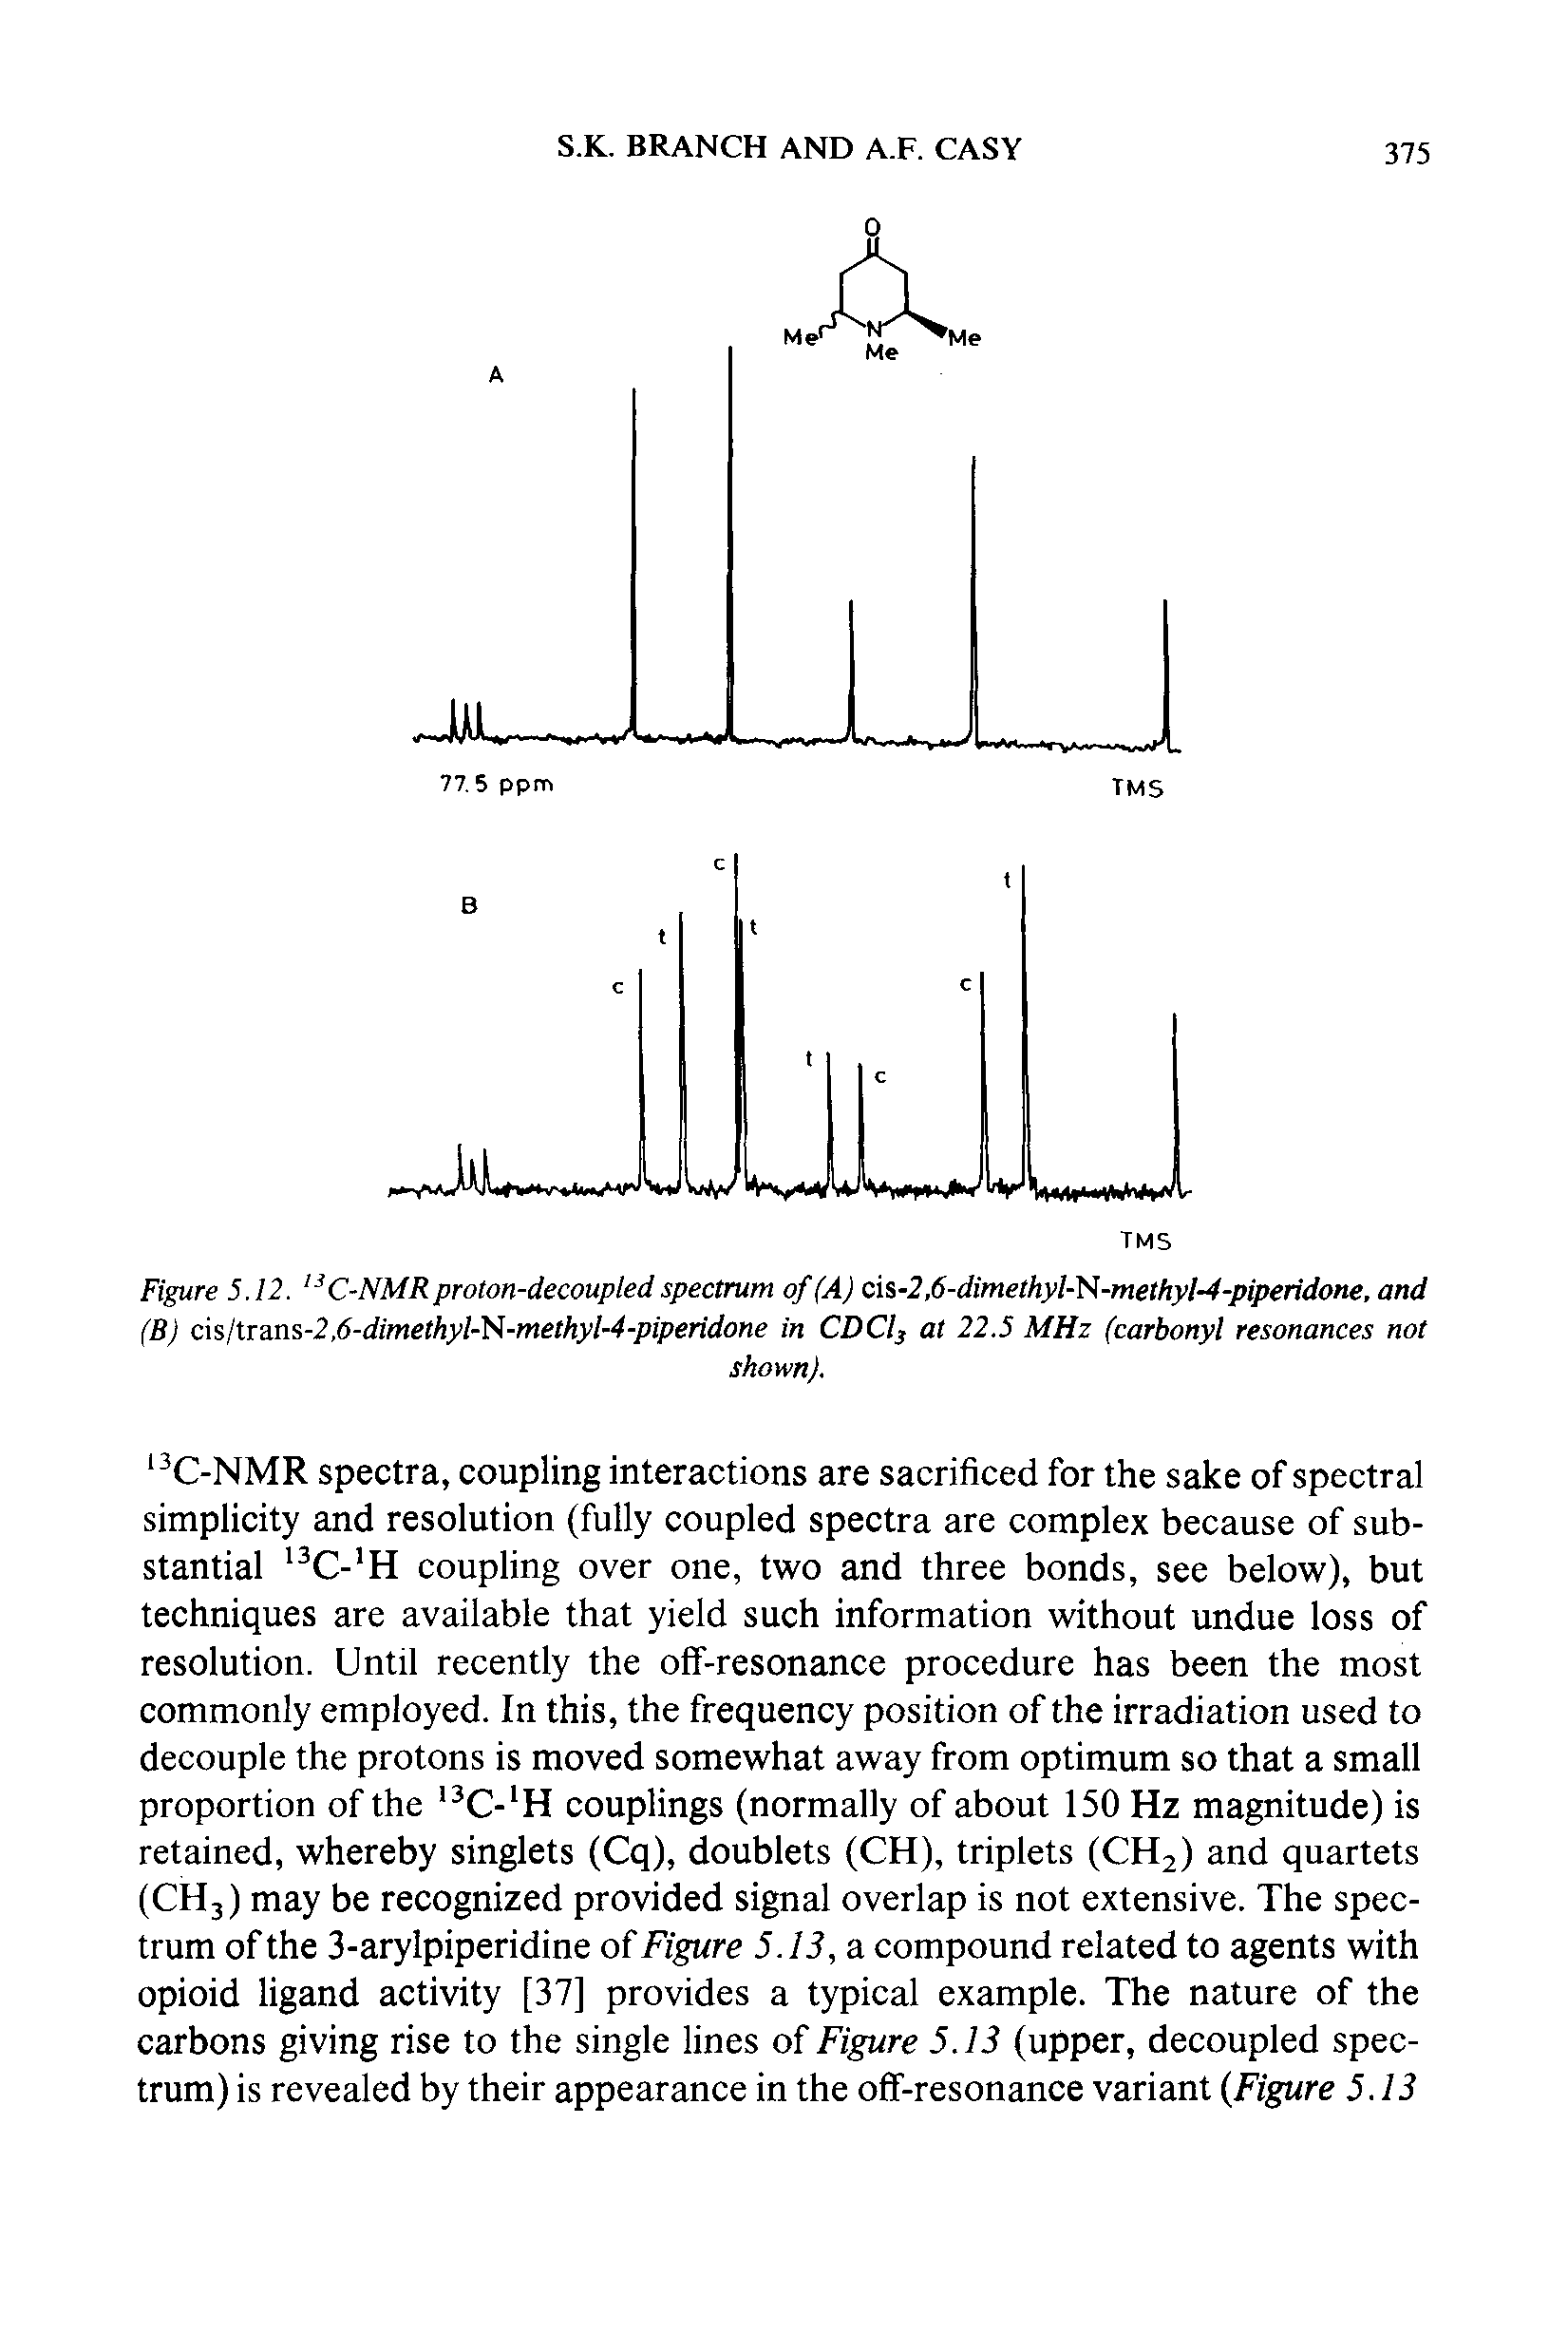 Figure 5.12. C-NMR proton-decoupled spectrum of (A) c %-2,6-dimethyl- A-methyl-4-piperidone, and (B) c s/trans-2,6-dimethyl-Tti-methyl-4-piperidone in CDClj at 22.5 MHz (carbonyl resonances not...